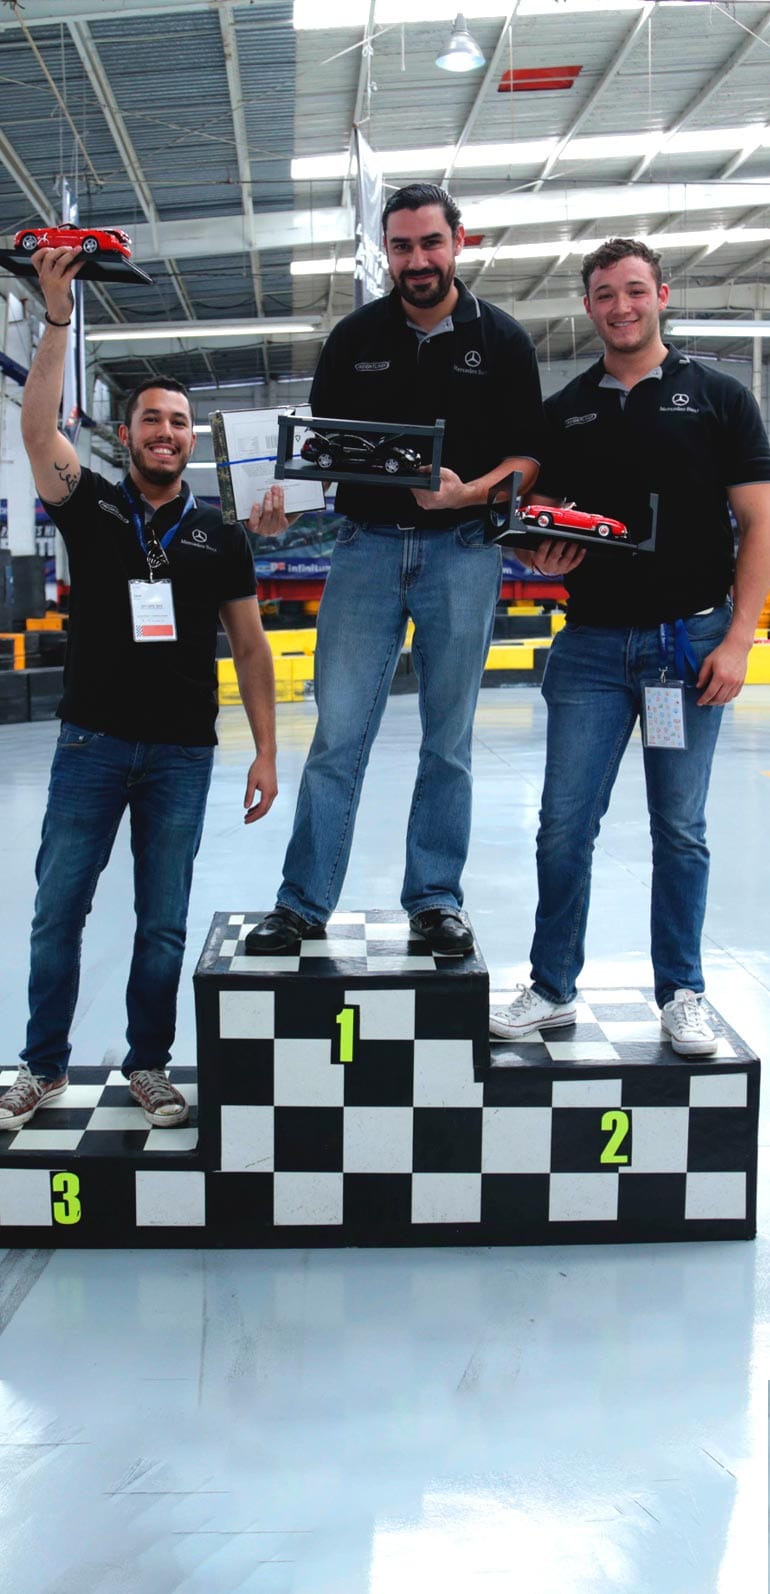 SATmexico dmc events team building go kart race winners mercedes benz